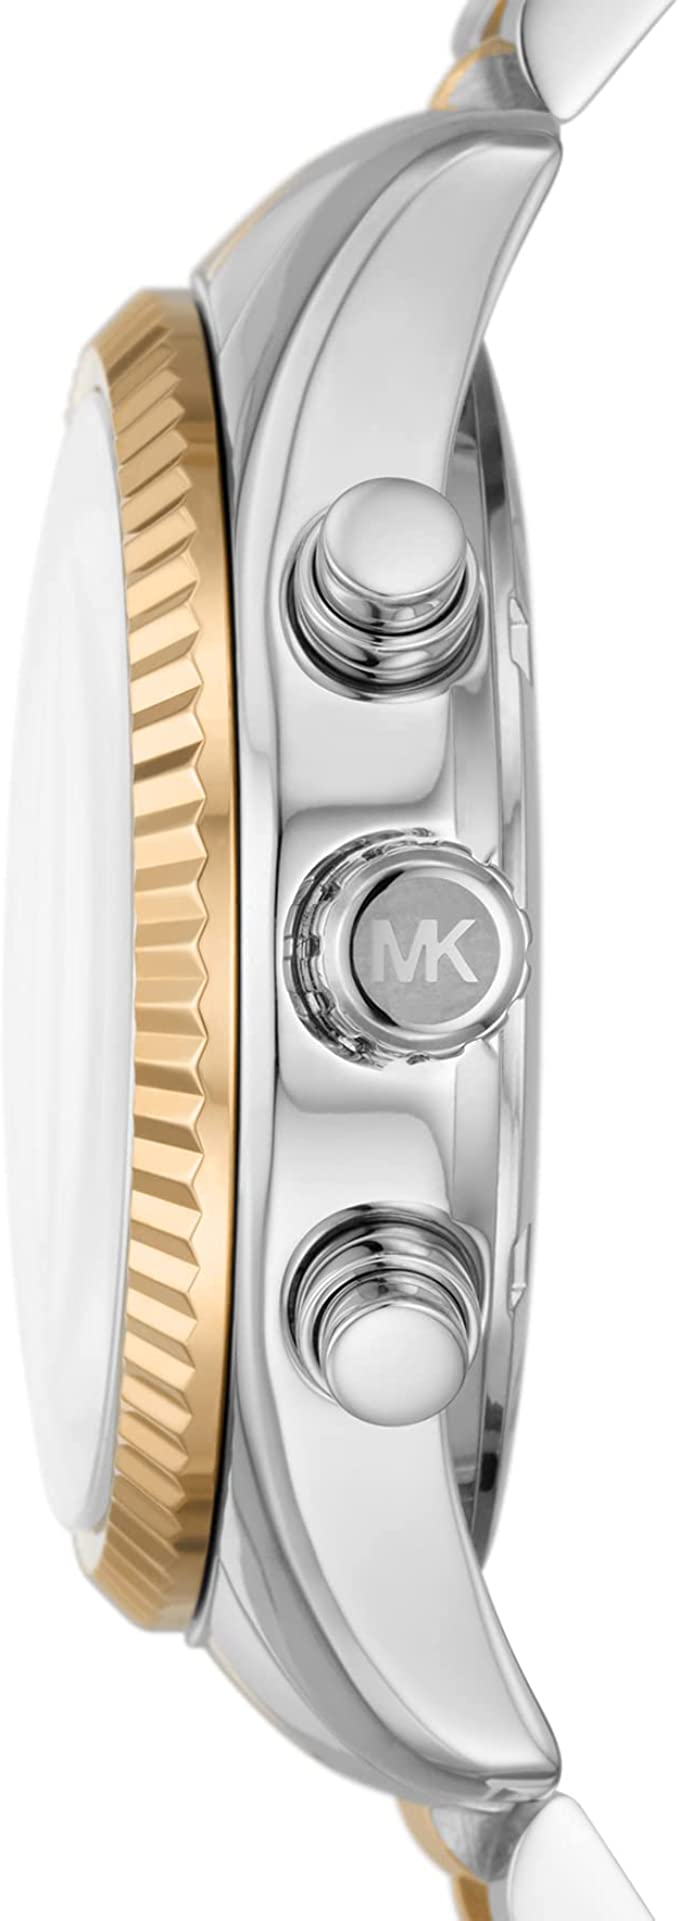 Zegarek damski Michael Kors MK7218 Lexington Chronograph złoty